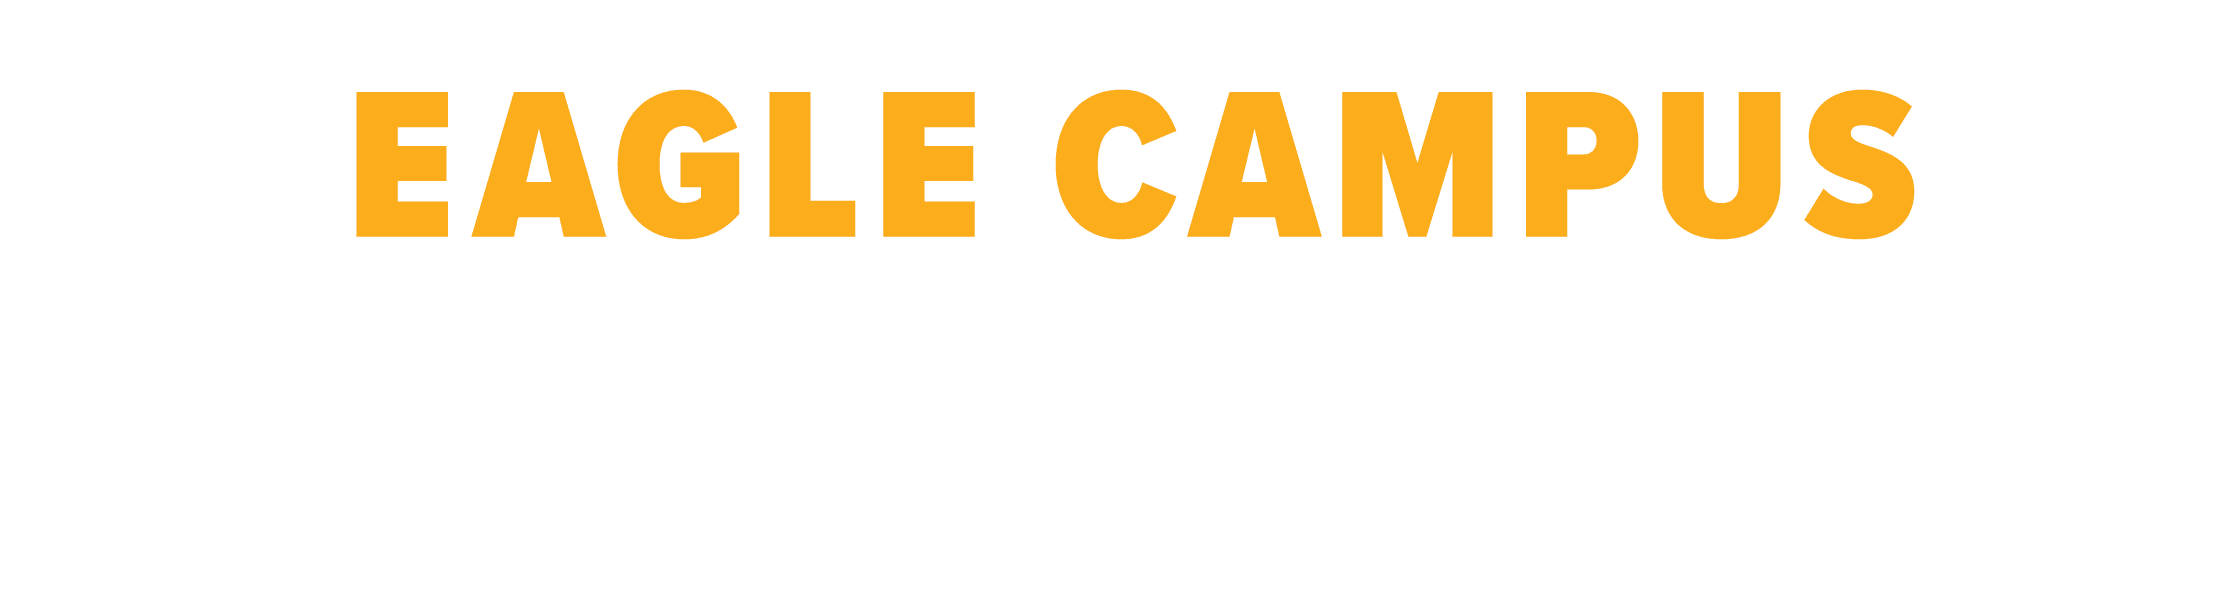 Eagle Campus Expansion Logo